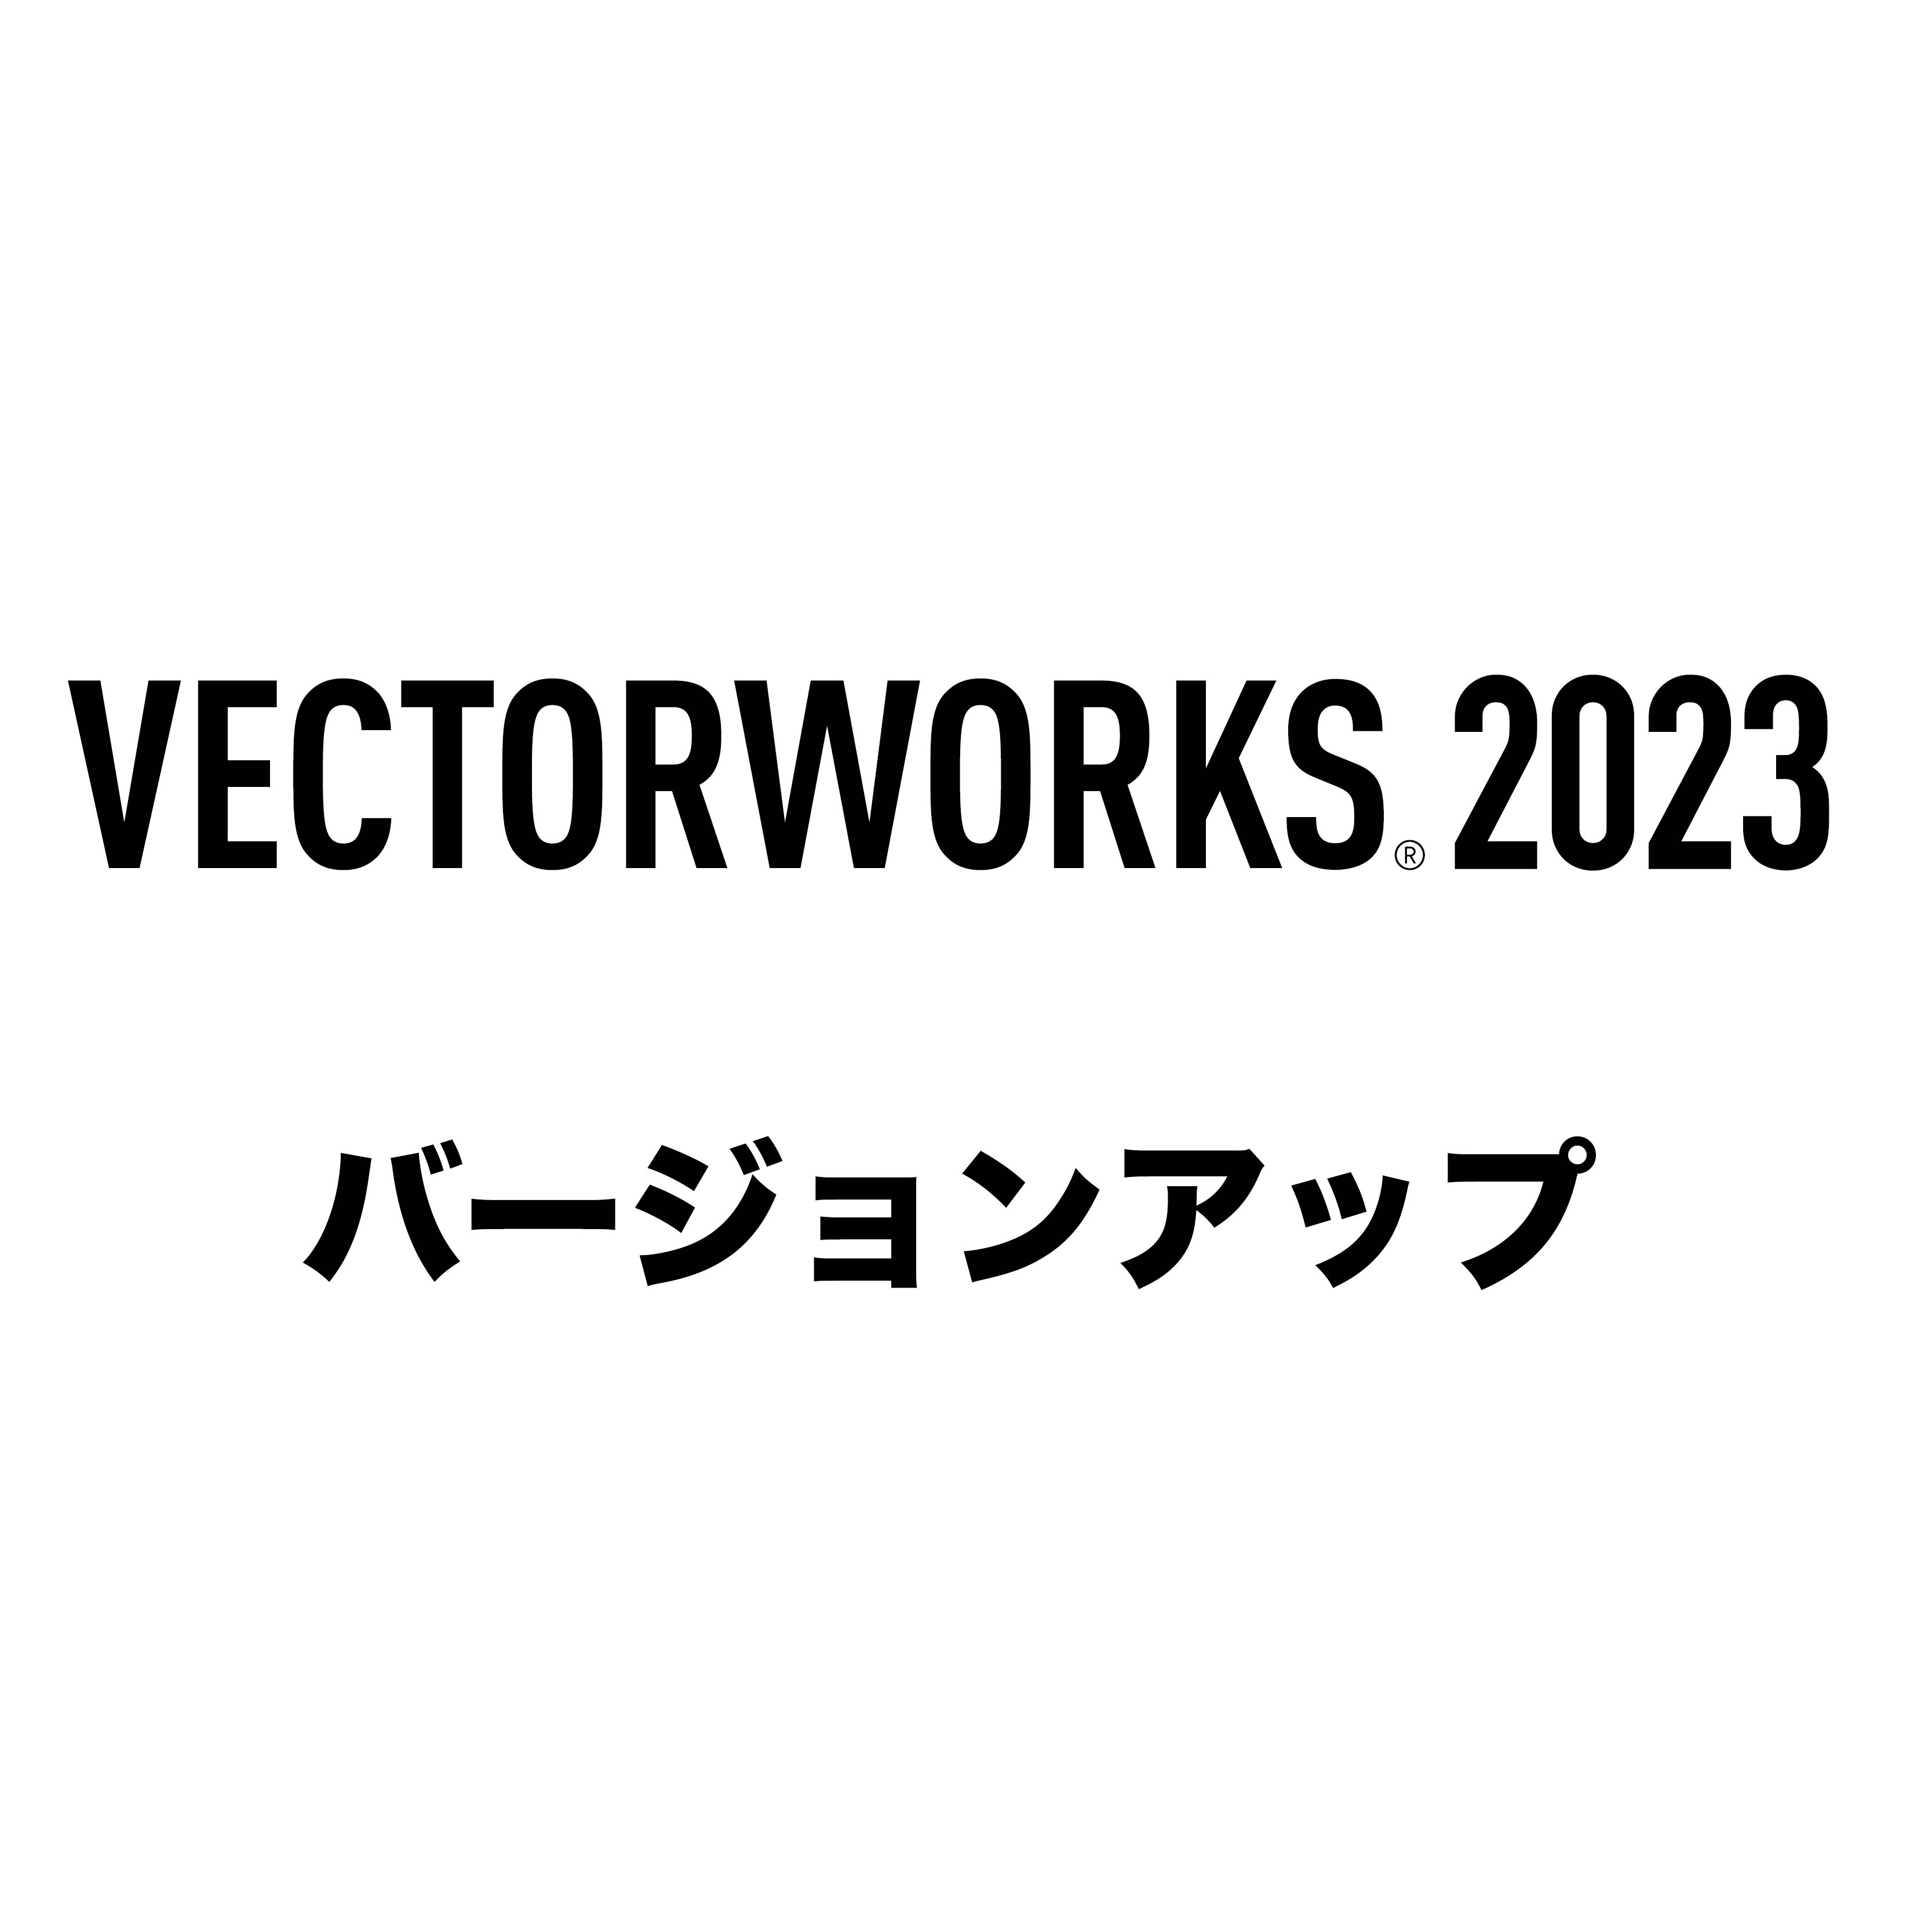 Vectorworks Fundamentals 2023 スタンドアロン版 バージョンアップ（2020→2023） [Vectorworks Service Select再契約キャンペーン用]